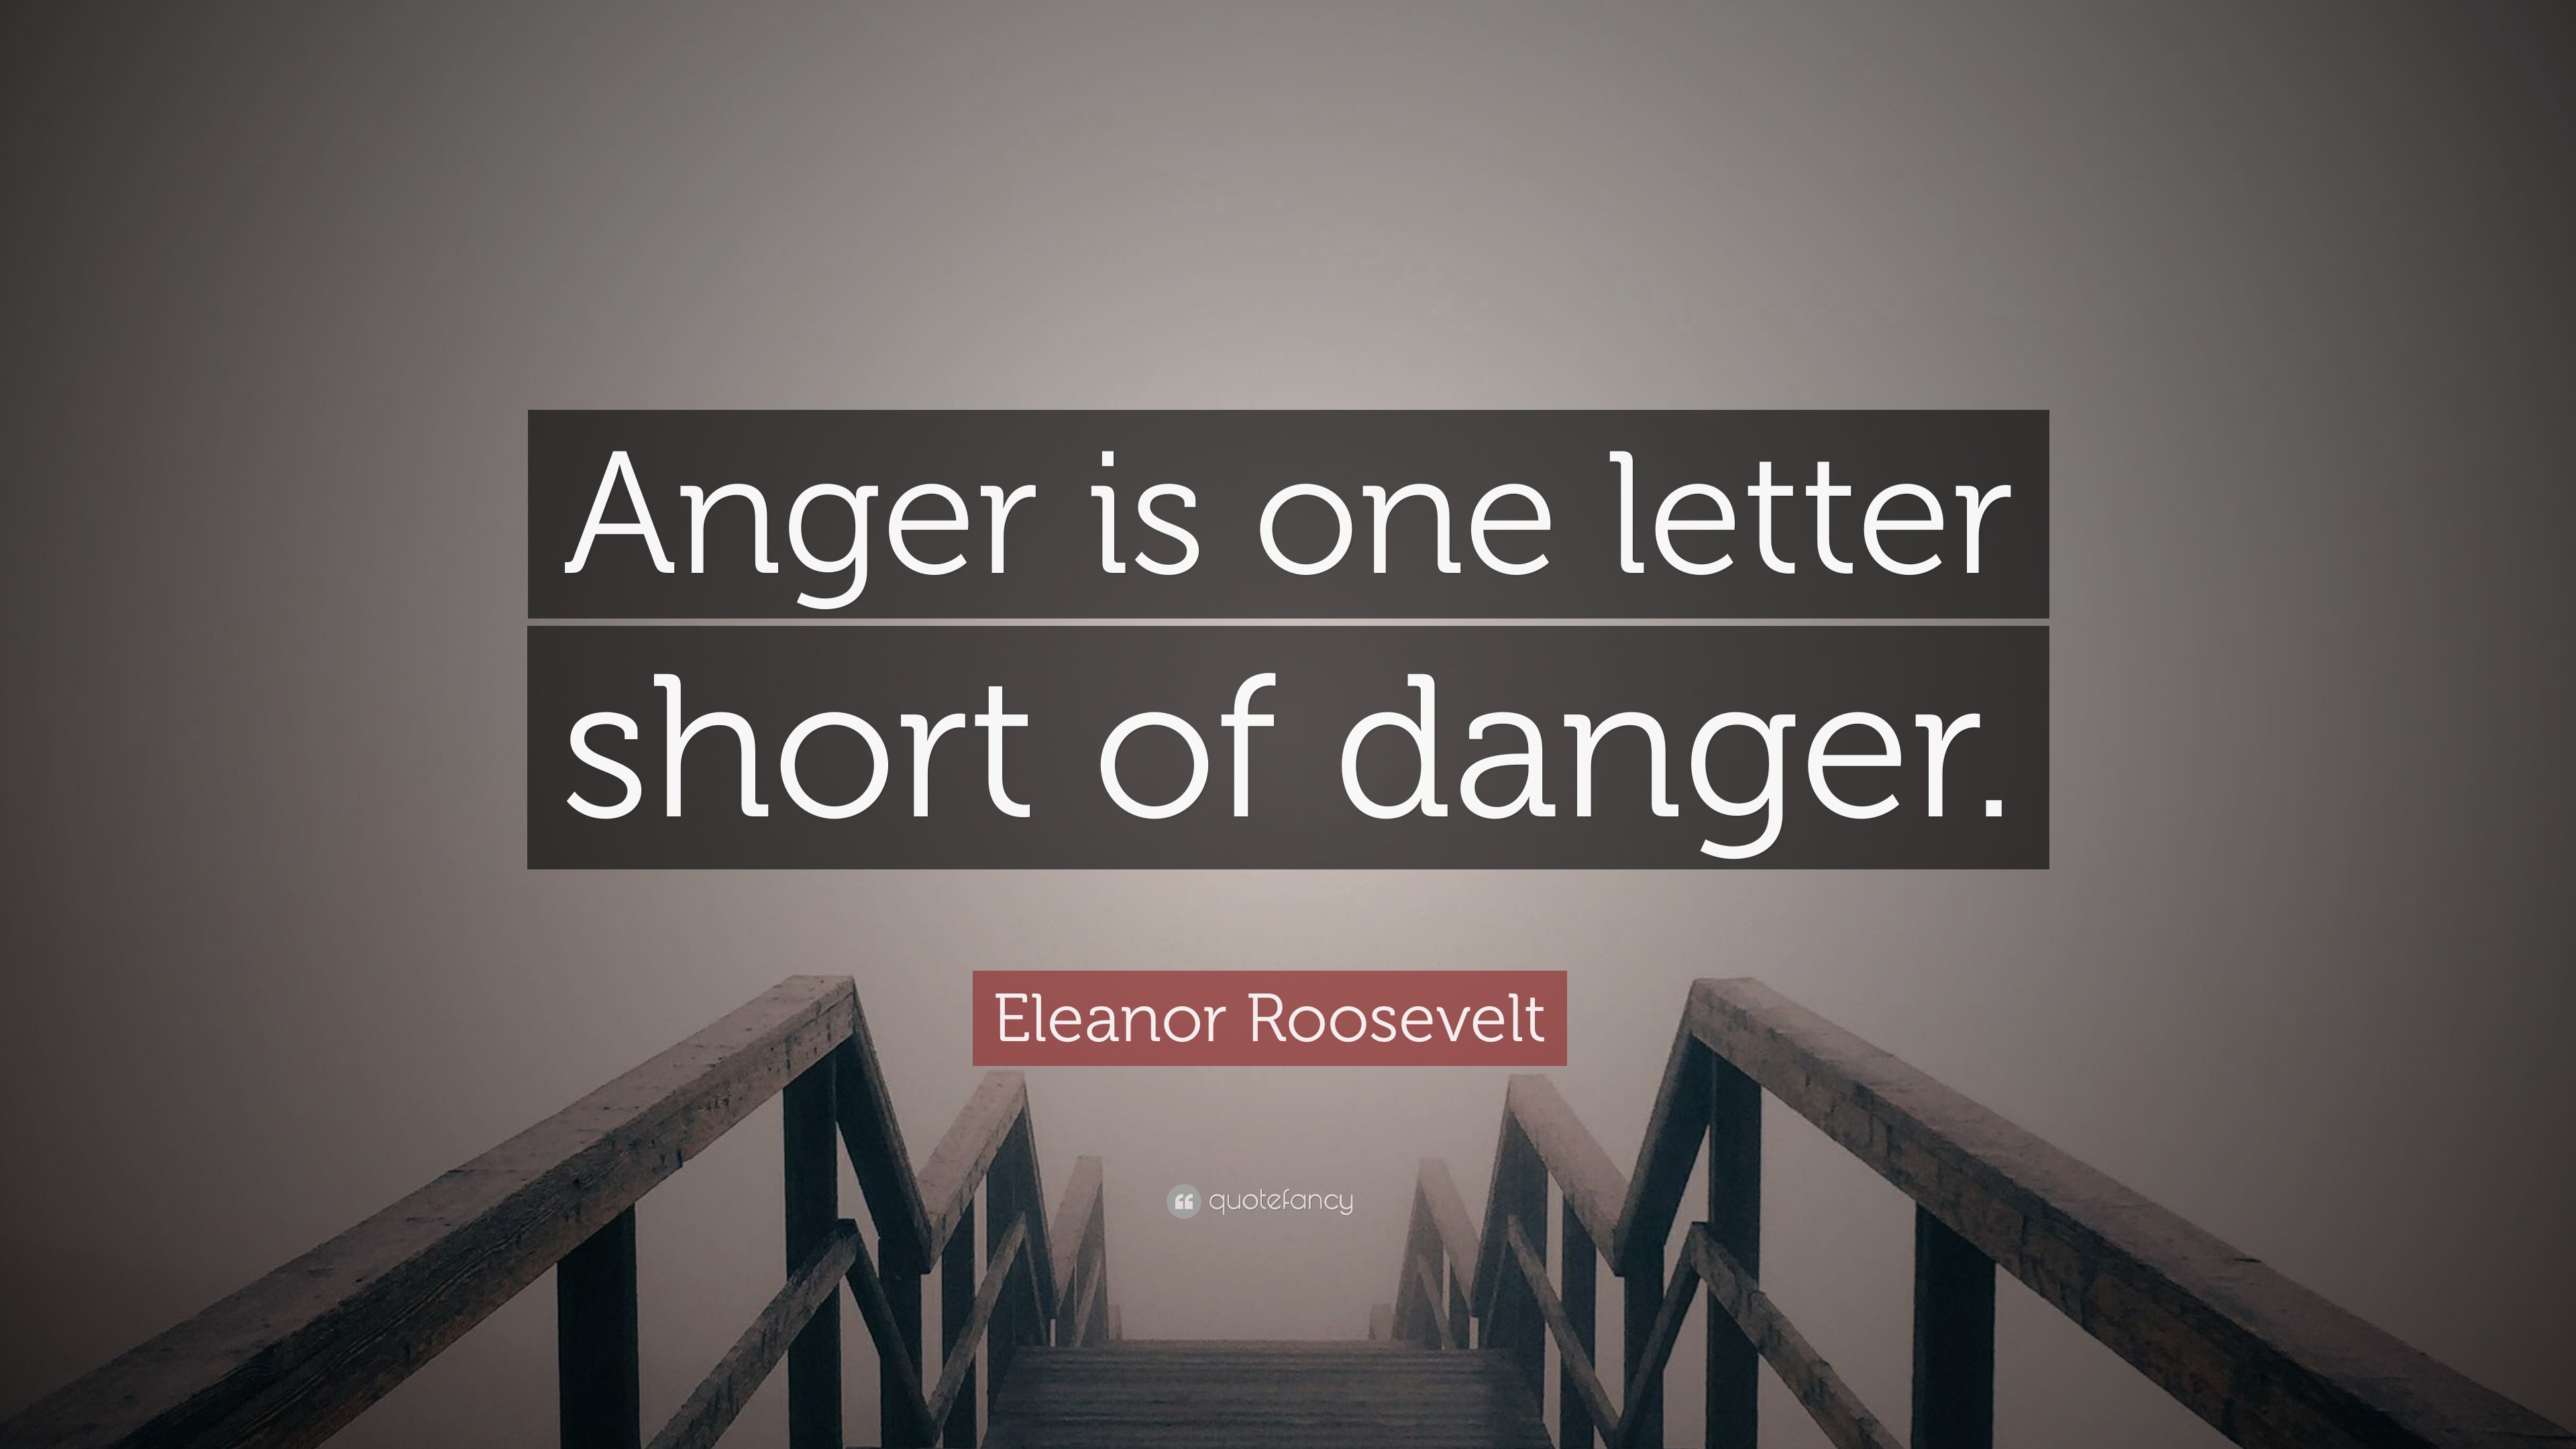 Eleanor Roosevelt Quote: “Anger is one letter short of danger.” (12